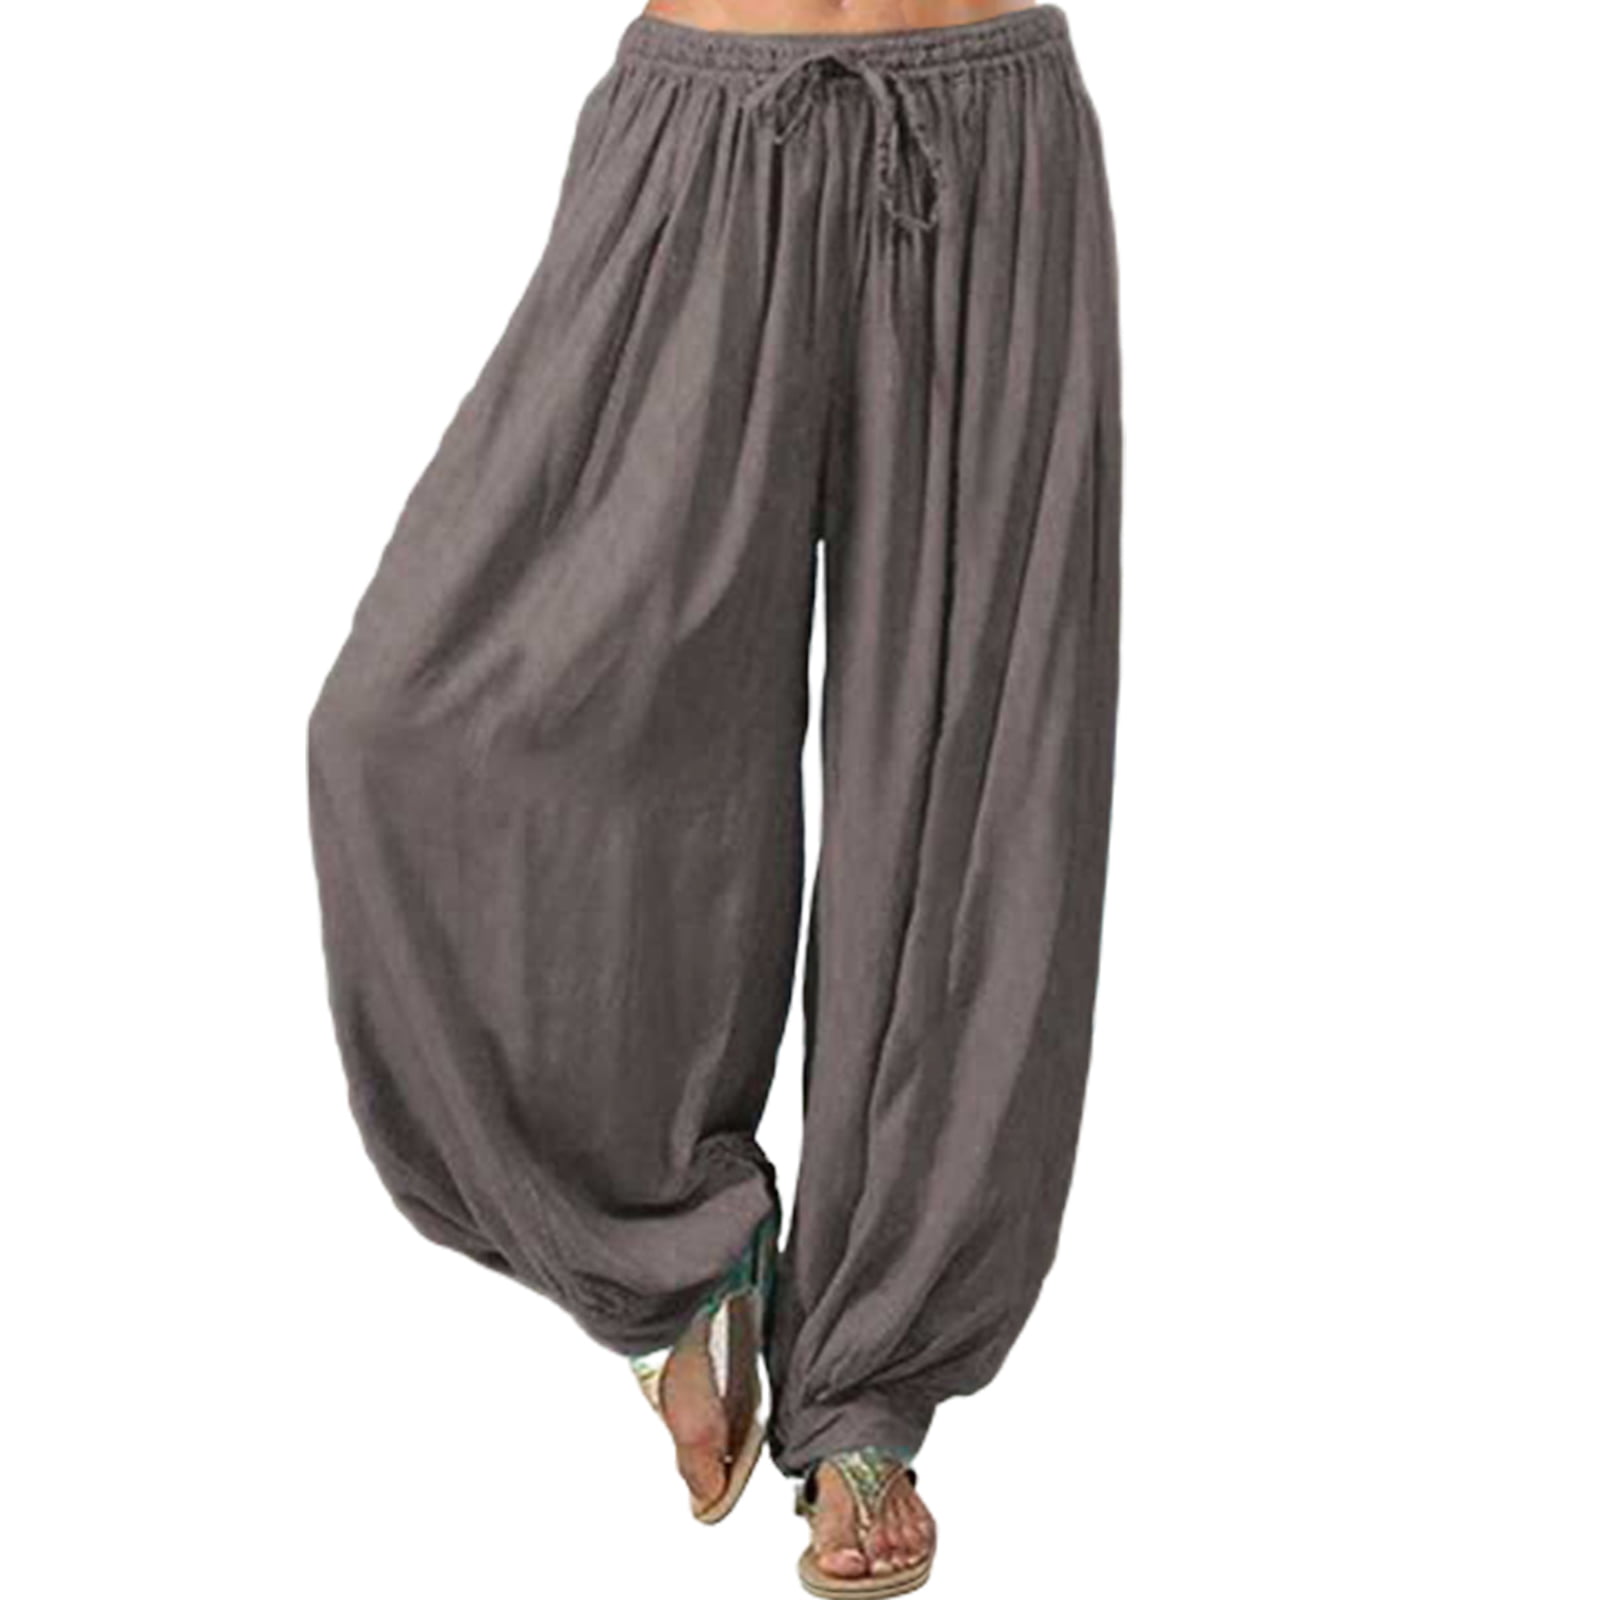 Harem Pants PARROT GREEN Chiffon Harem Yoga Pant Genie Aladdin Belly Dance Yoga Trouser Pant 